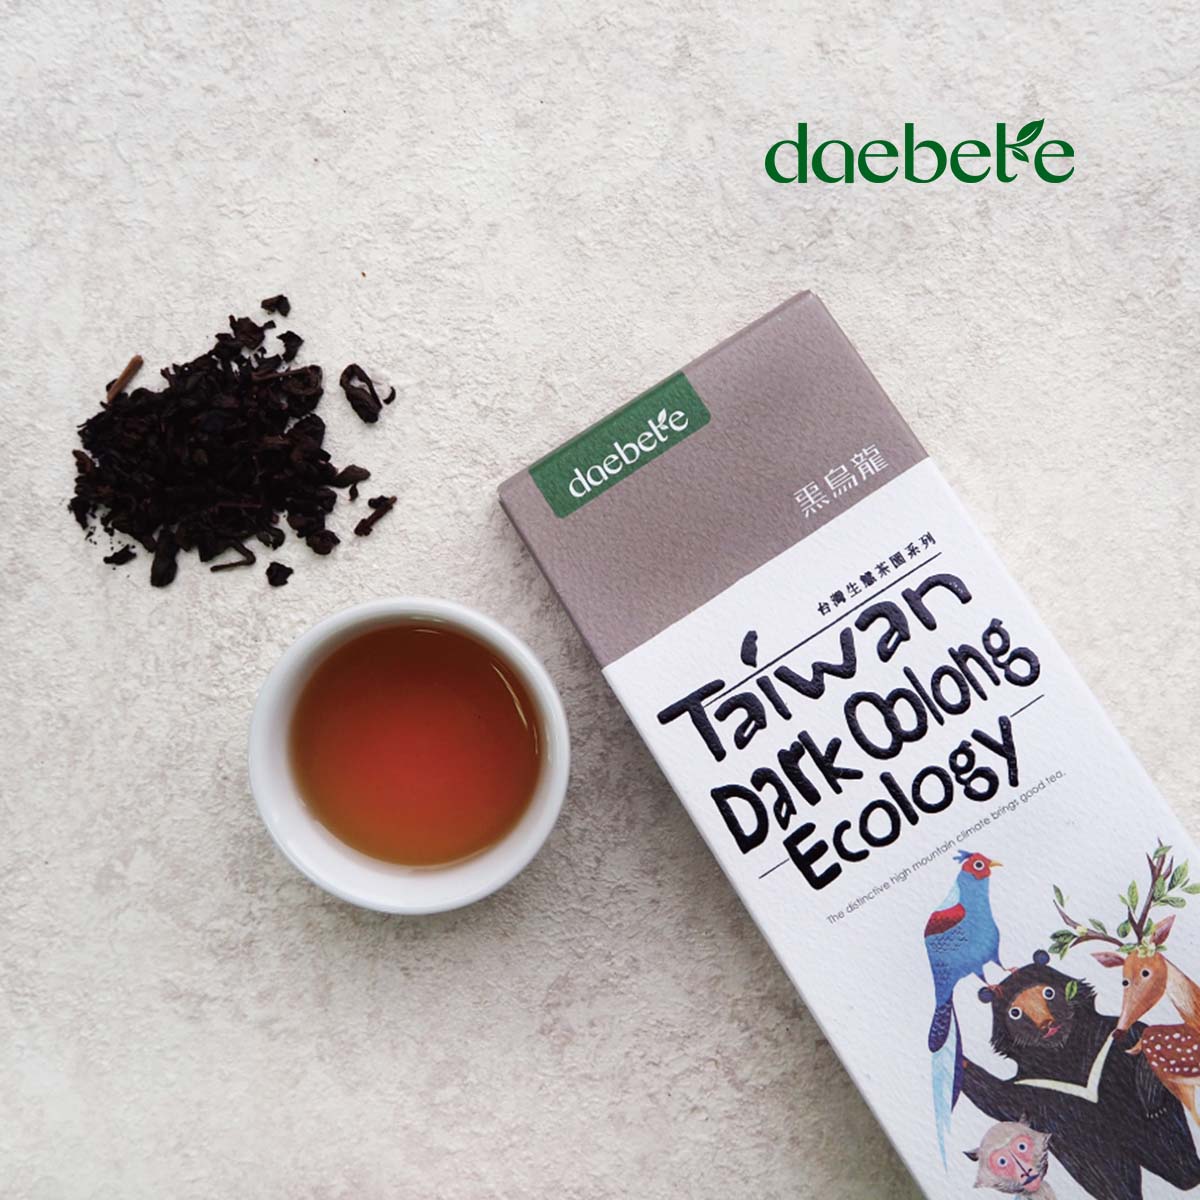 daebete 黒烏龍(Taiwan Dark Oolong Ecology)Tバッグ１５袋入り（個包装）台湾茶